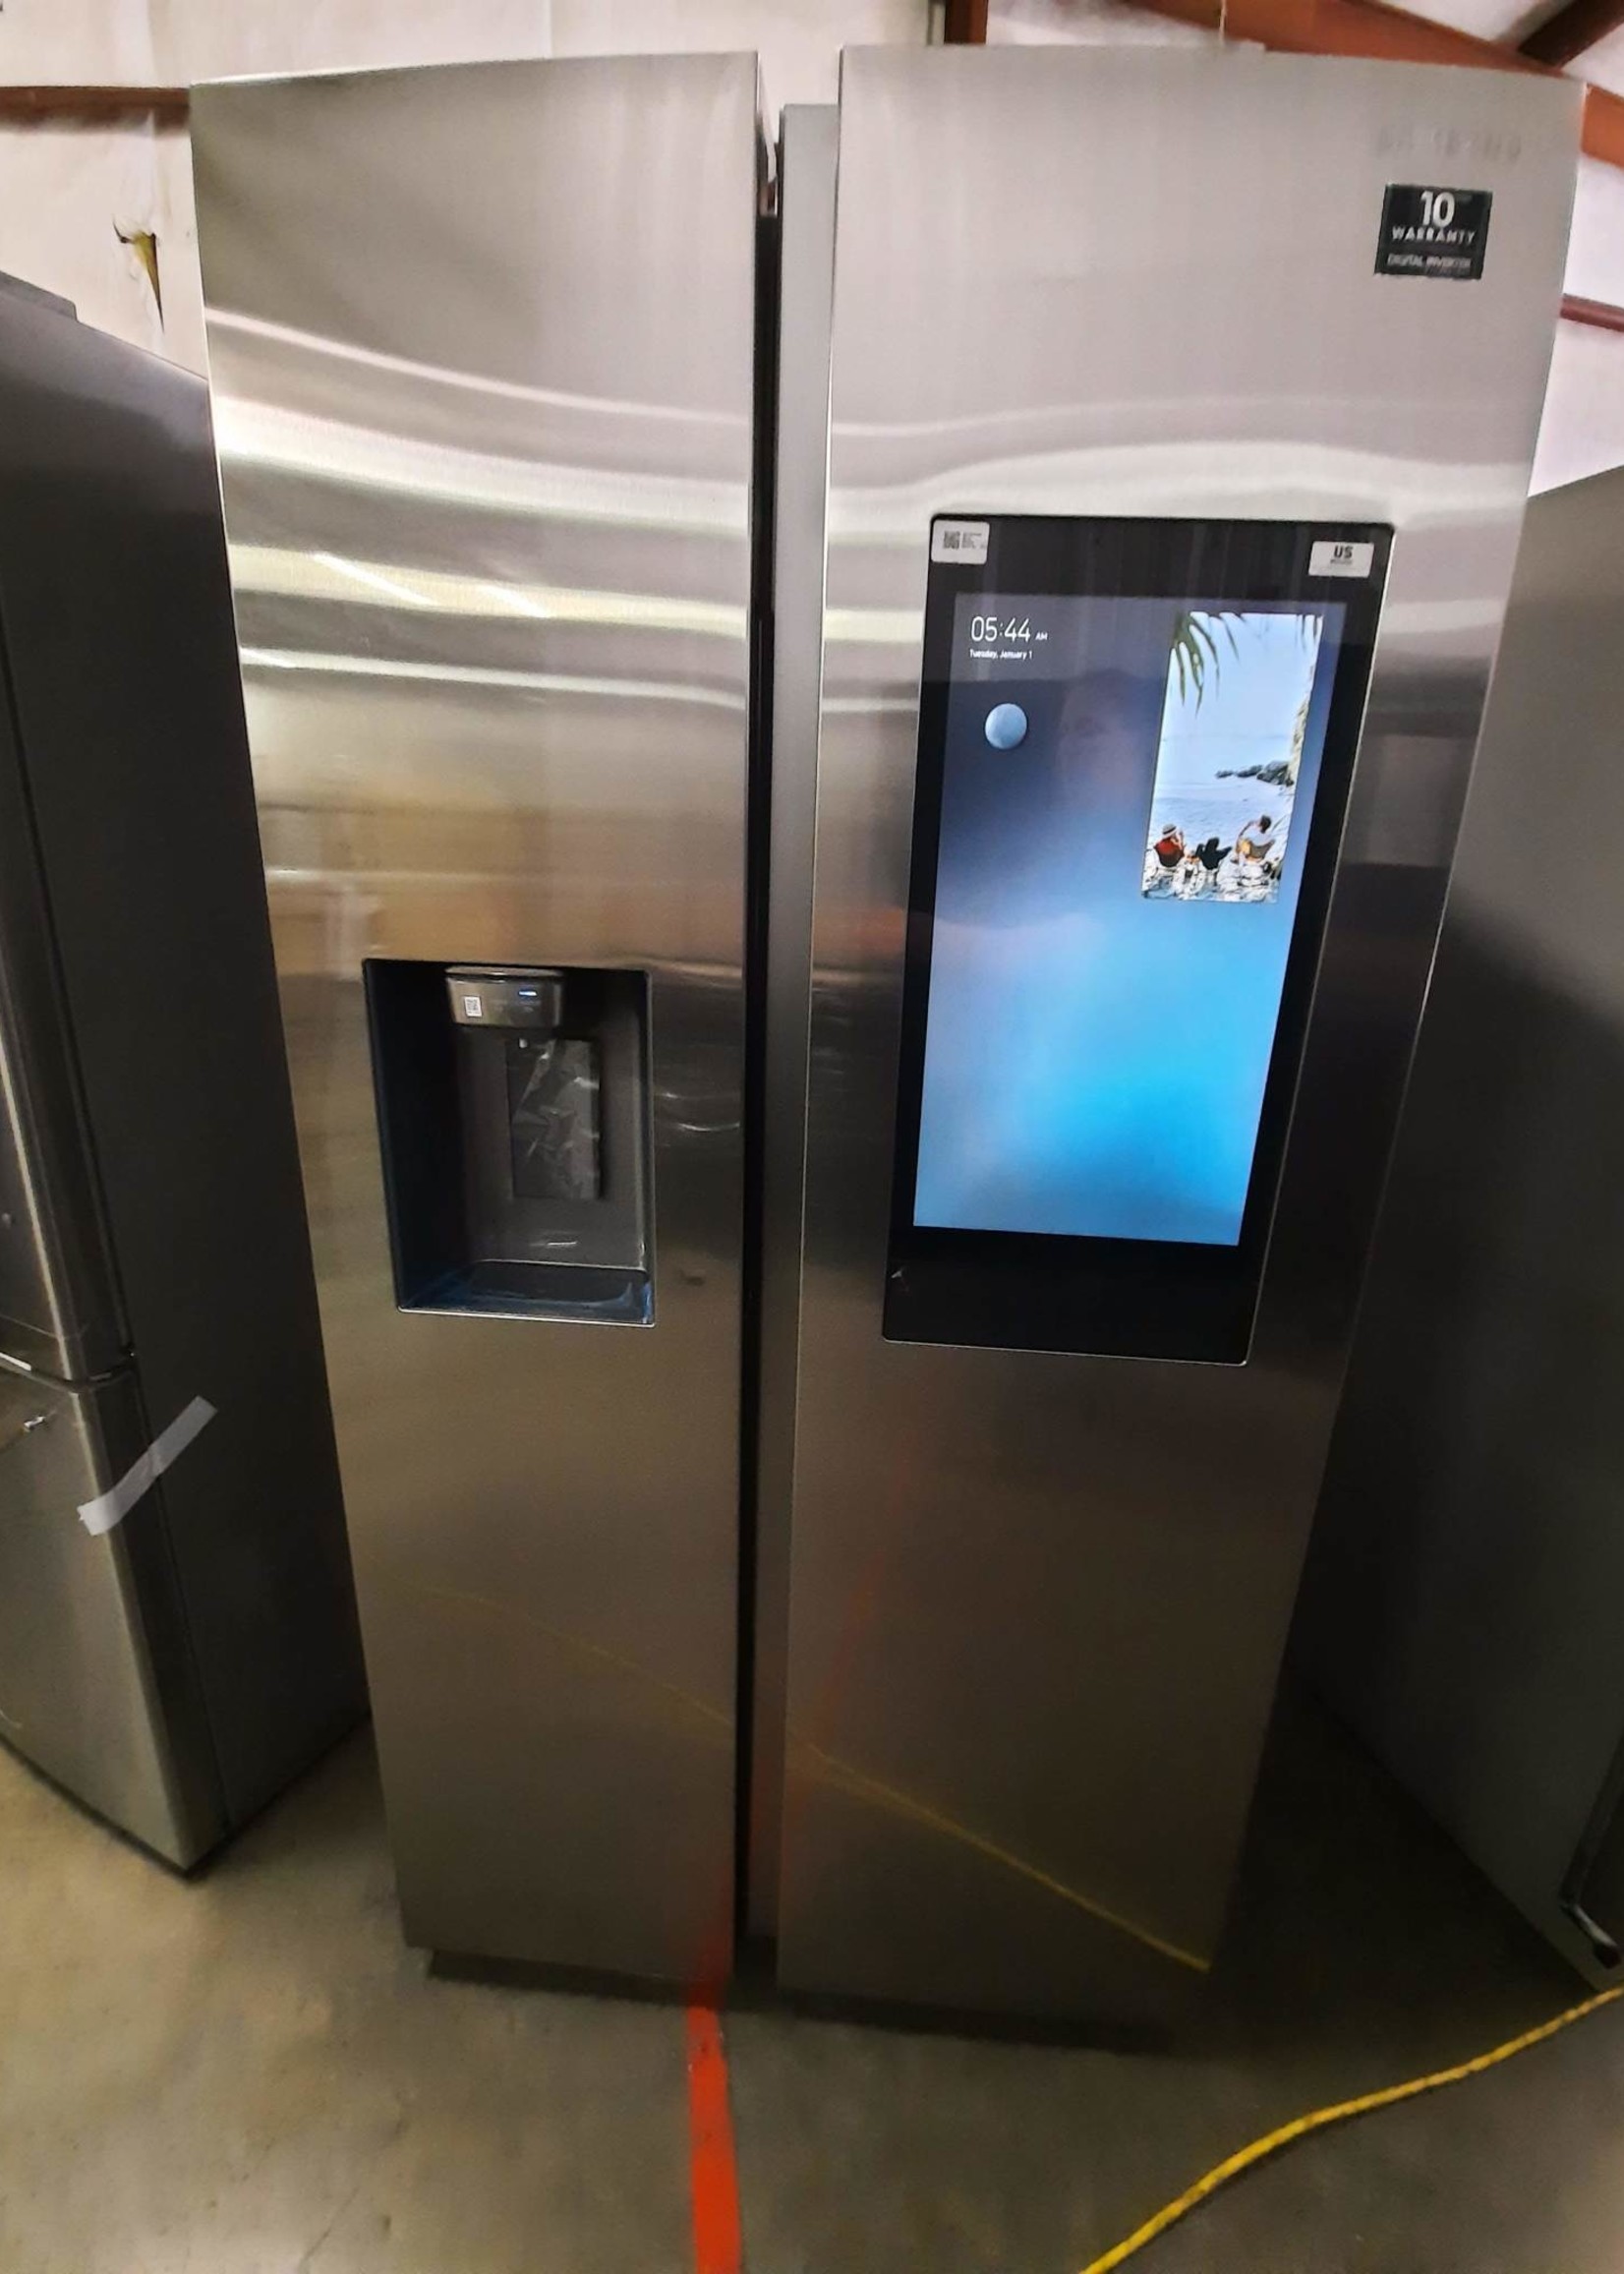 *Samsung RS22T5561SR 21.5 cu. ft. Family Hub Side by Side Smart Refrigerator in Fingerprint Resistant Stainless Steel, Counter Depth